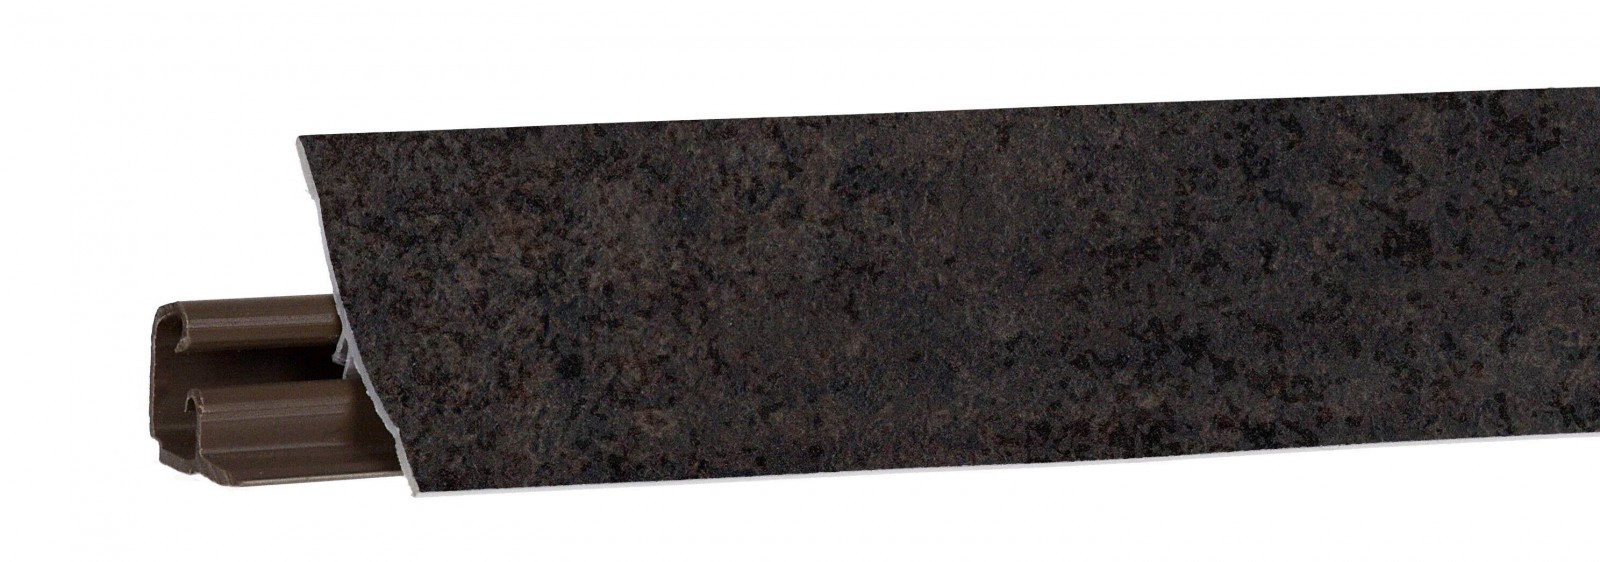 Плинтус пристенный, камень металл антрацит 3,0 м LB-231-7004 KORNER - фото - 1